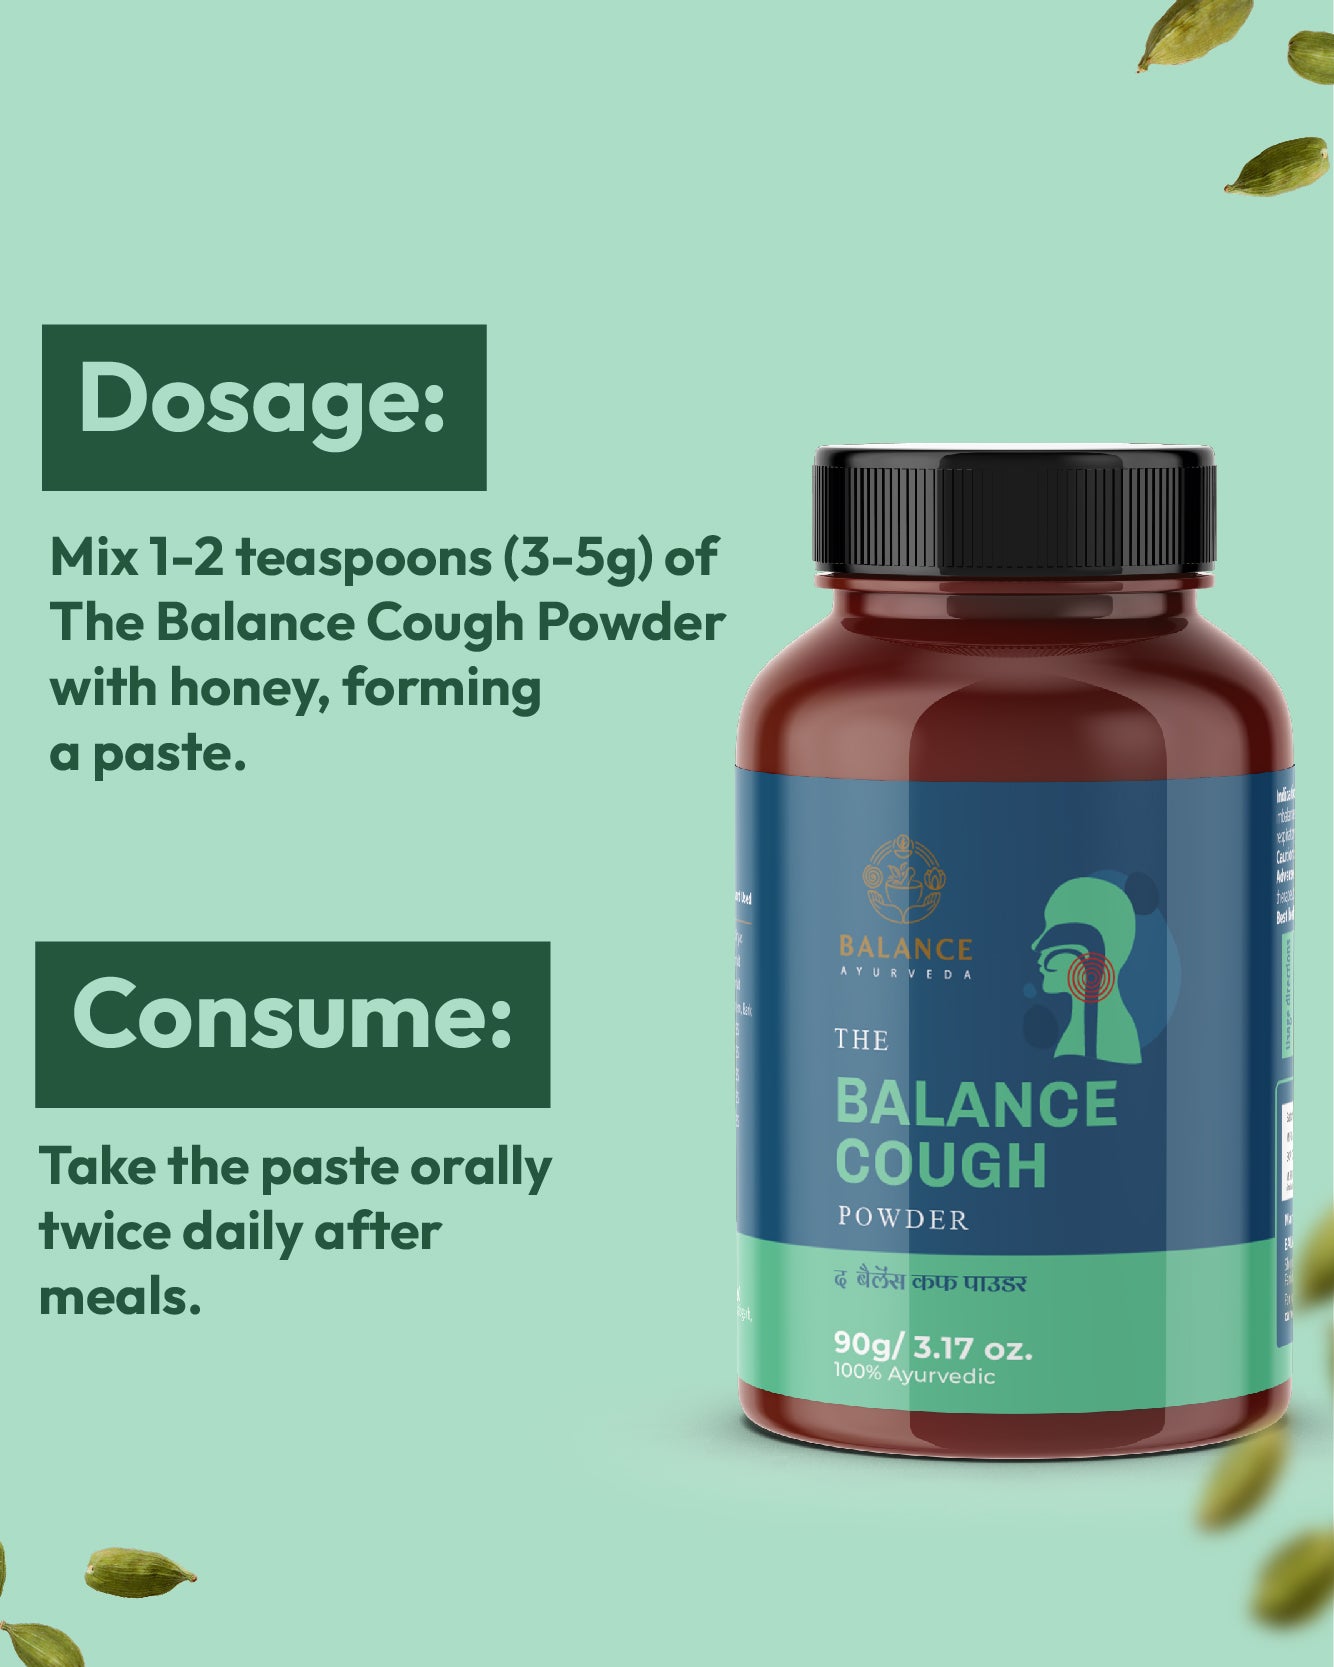 The Balance Cough Powder